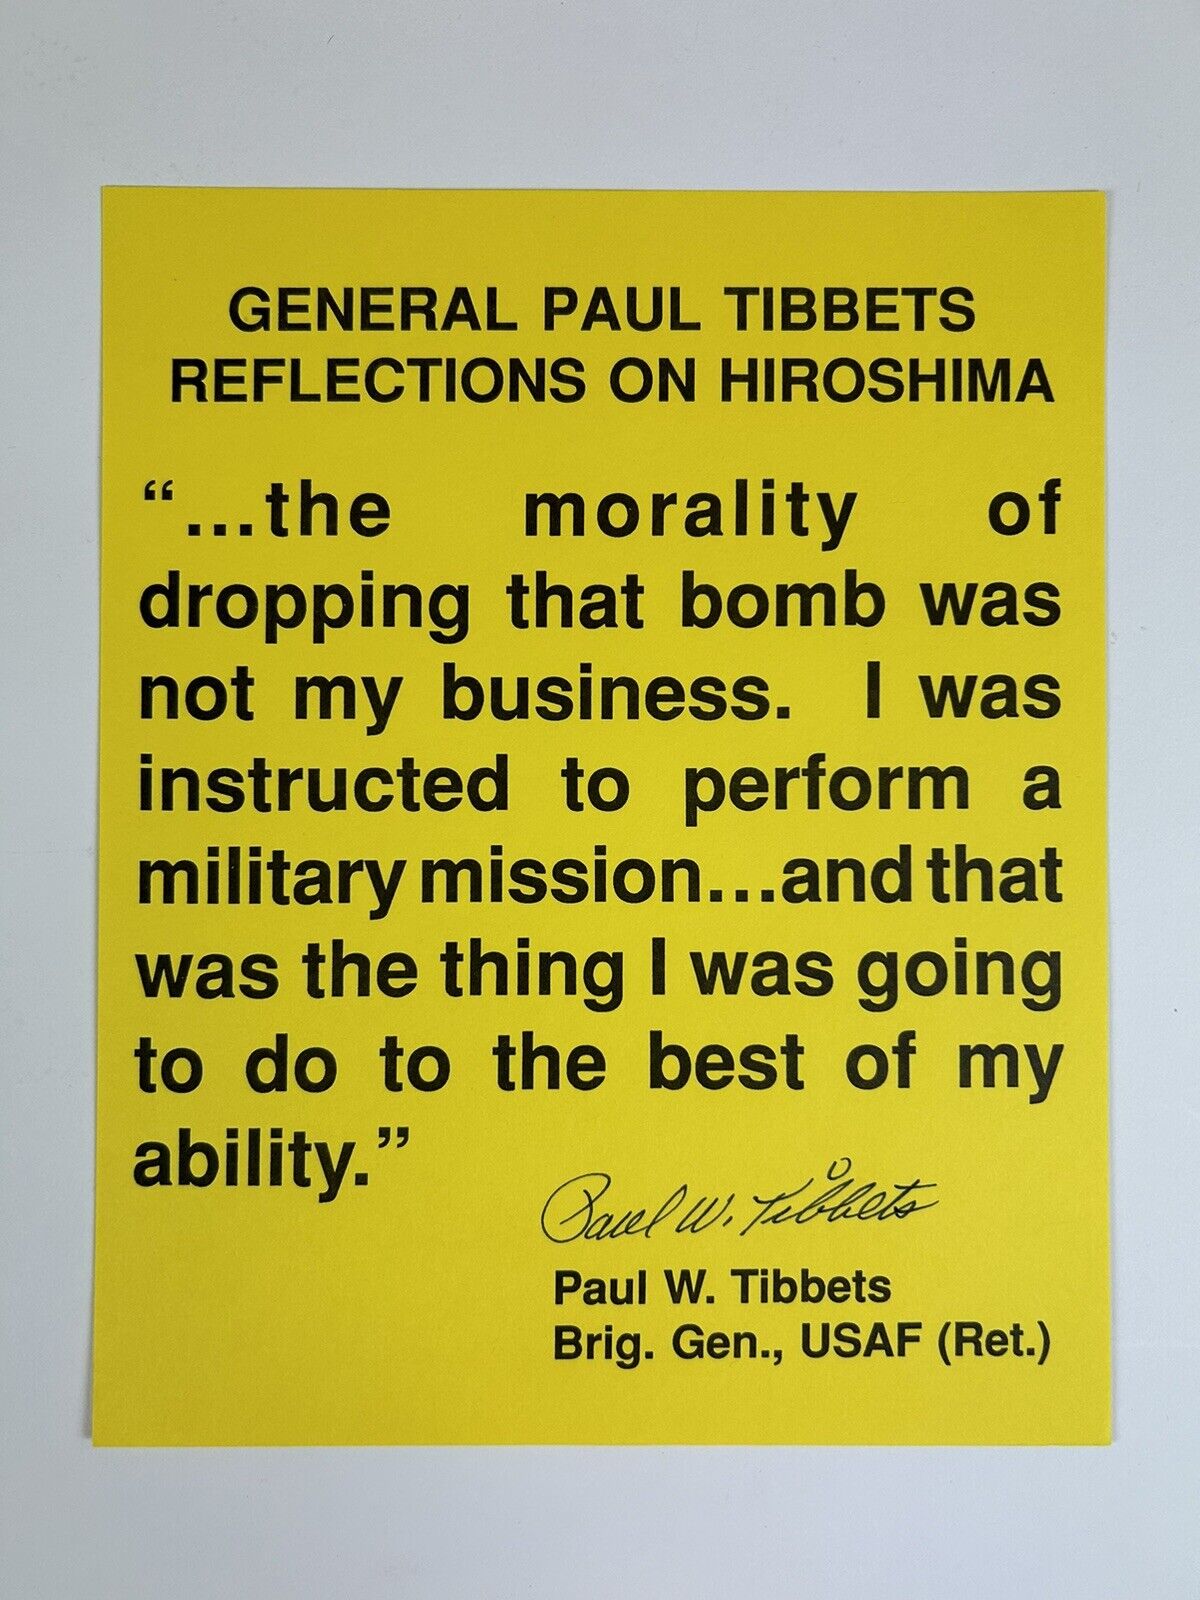 PAUL TIBBETS SIGNED STATEMENT ON THE HIROSHIMA ATOMIC BOMB, ENOLA GAY